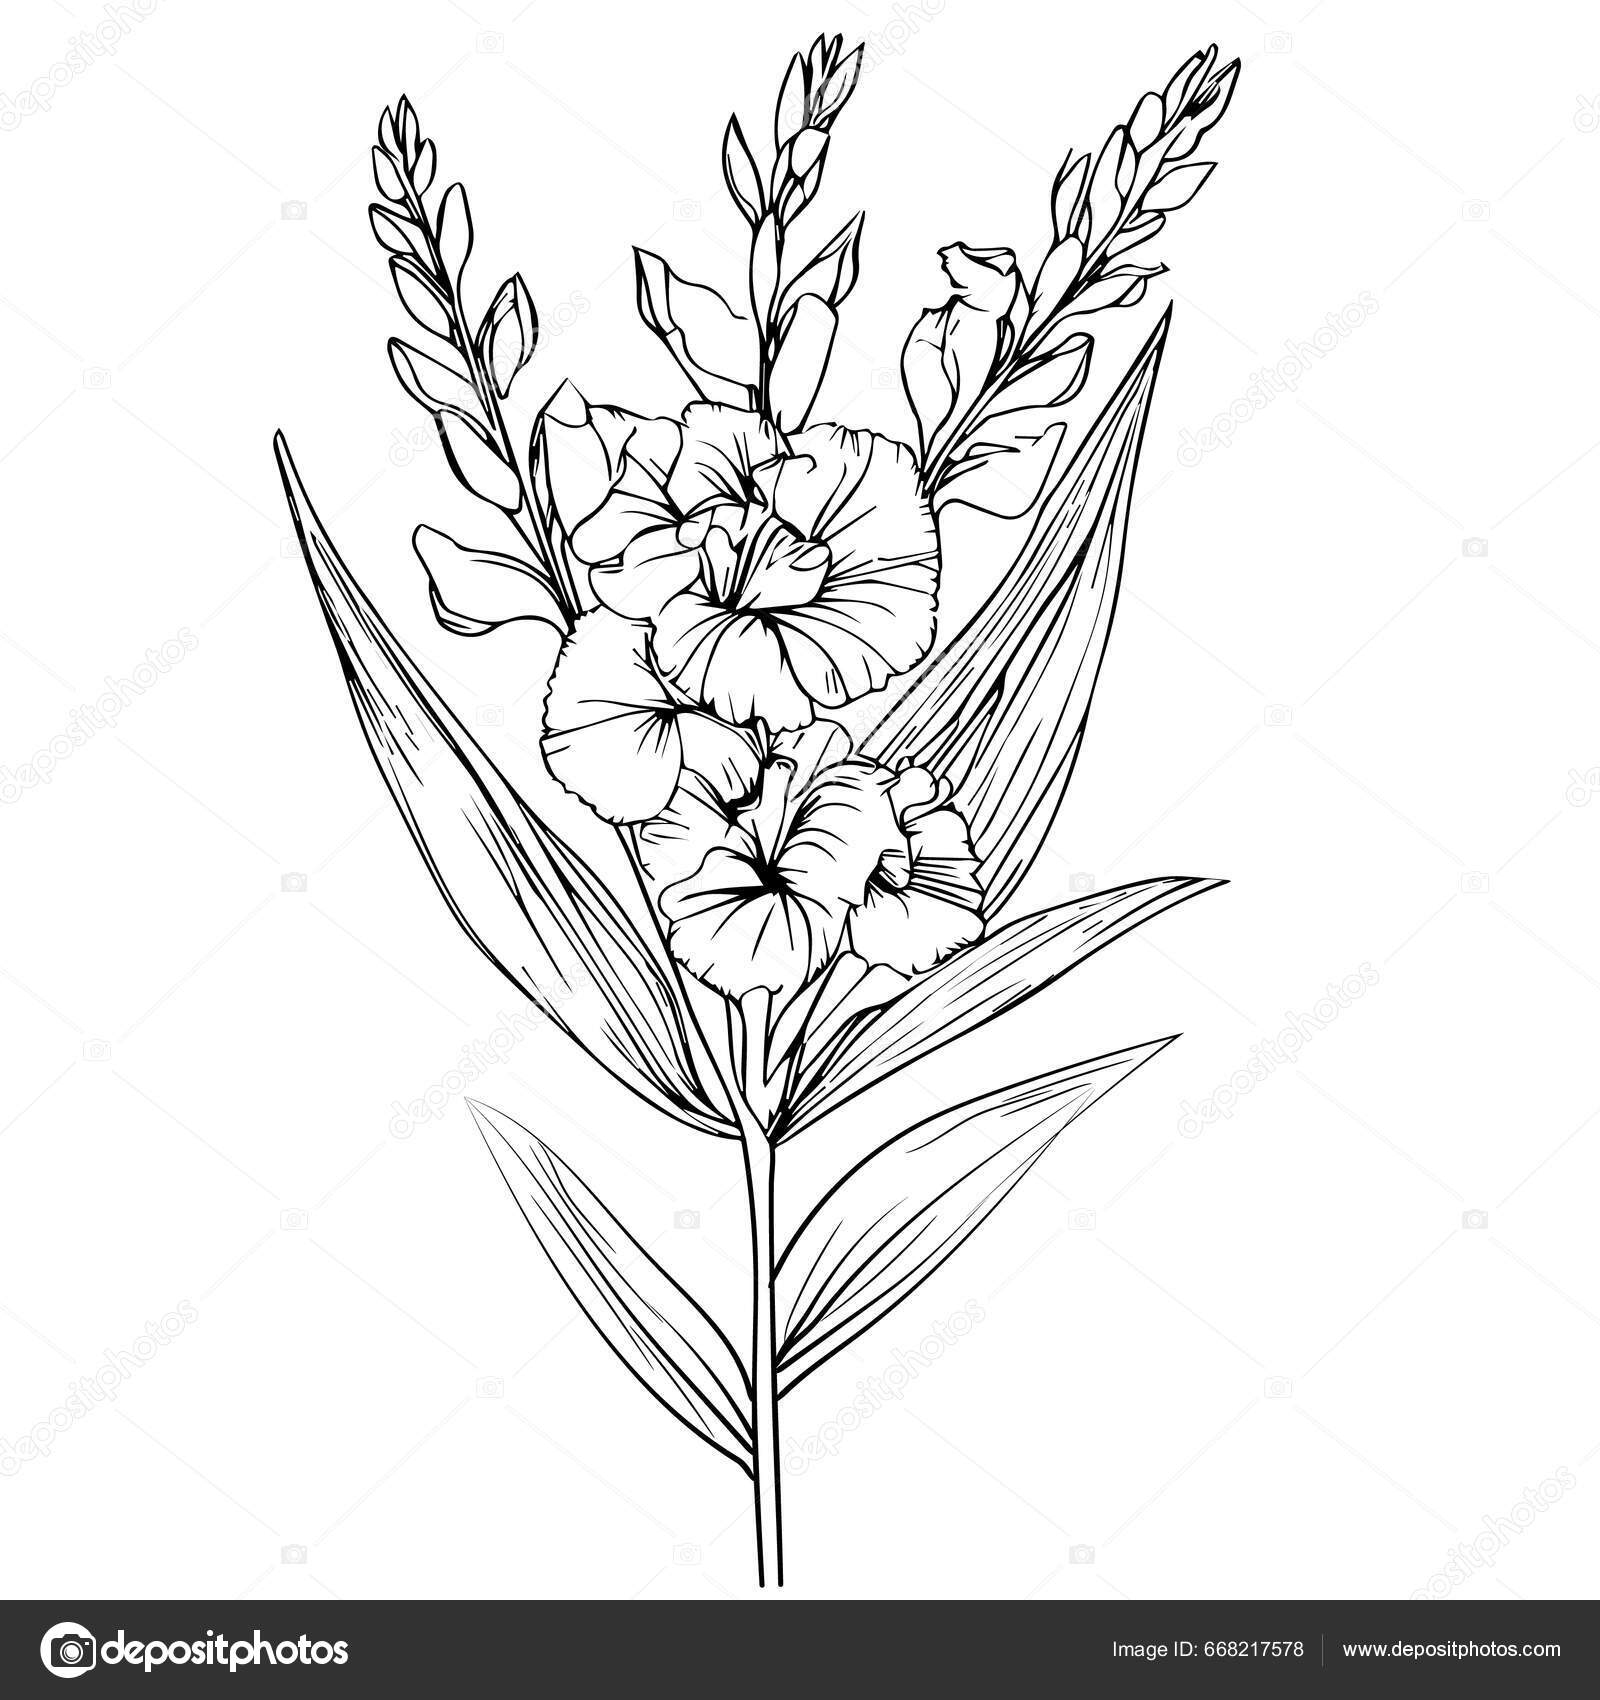 Gladiolus flower tattoo. Meaning of strength and serenity. | Gladiolus  flower tattoos, Gladiolus tattoo, Flower wrist tattoos